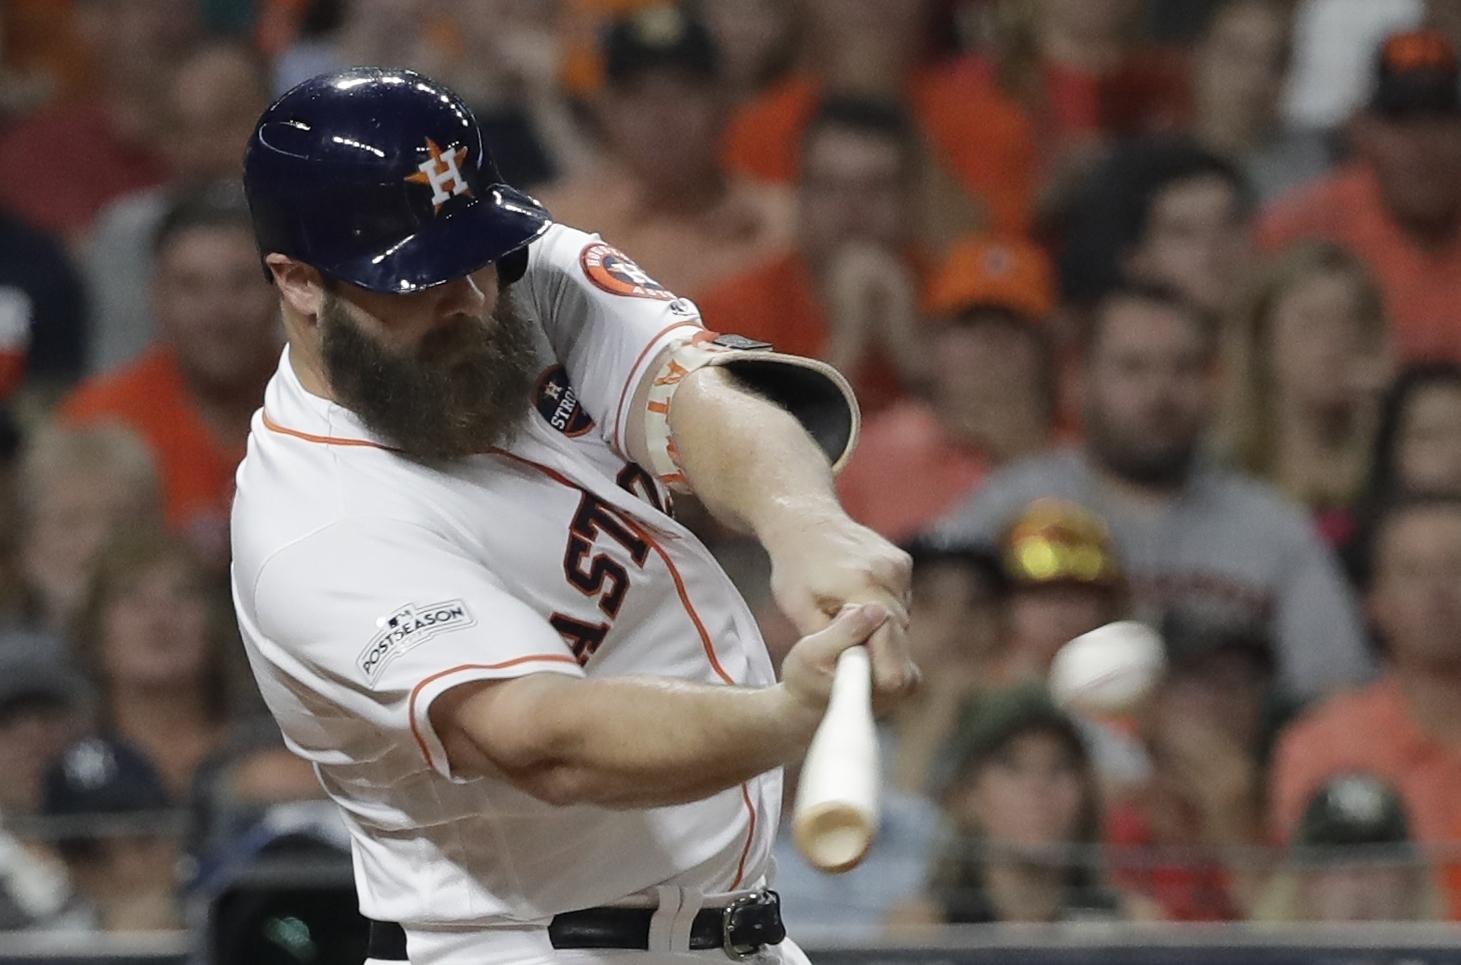 Houston Astros Cheating Spotlights Baseball, Not Football